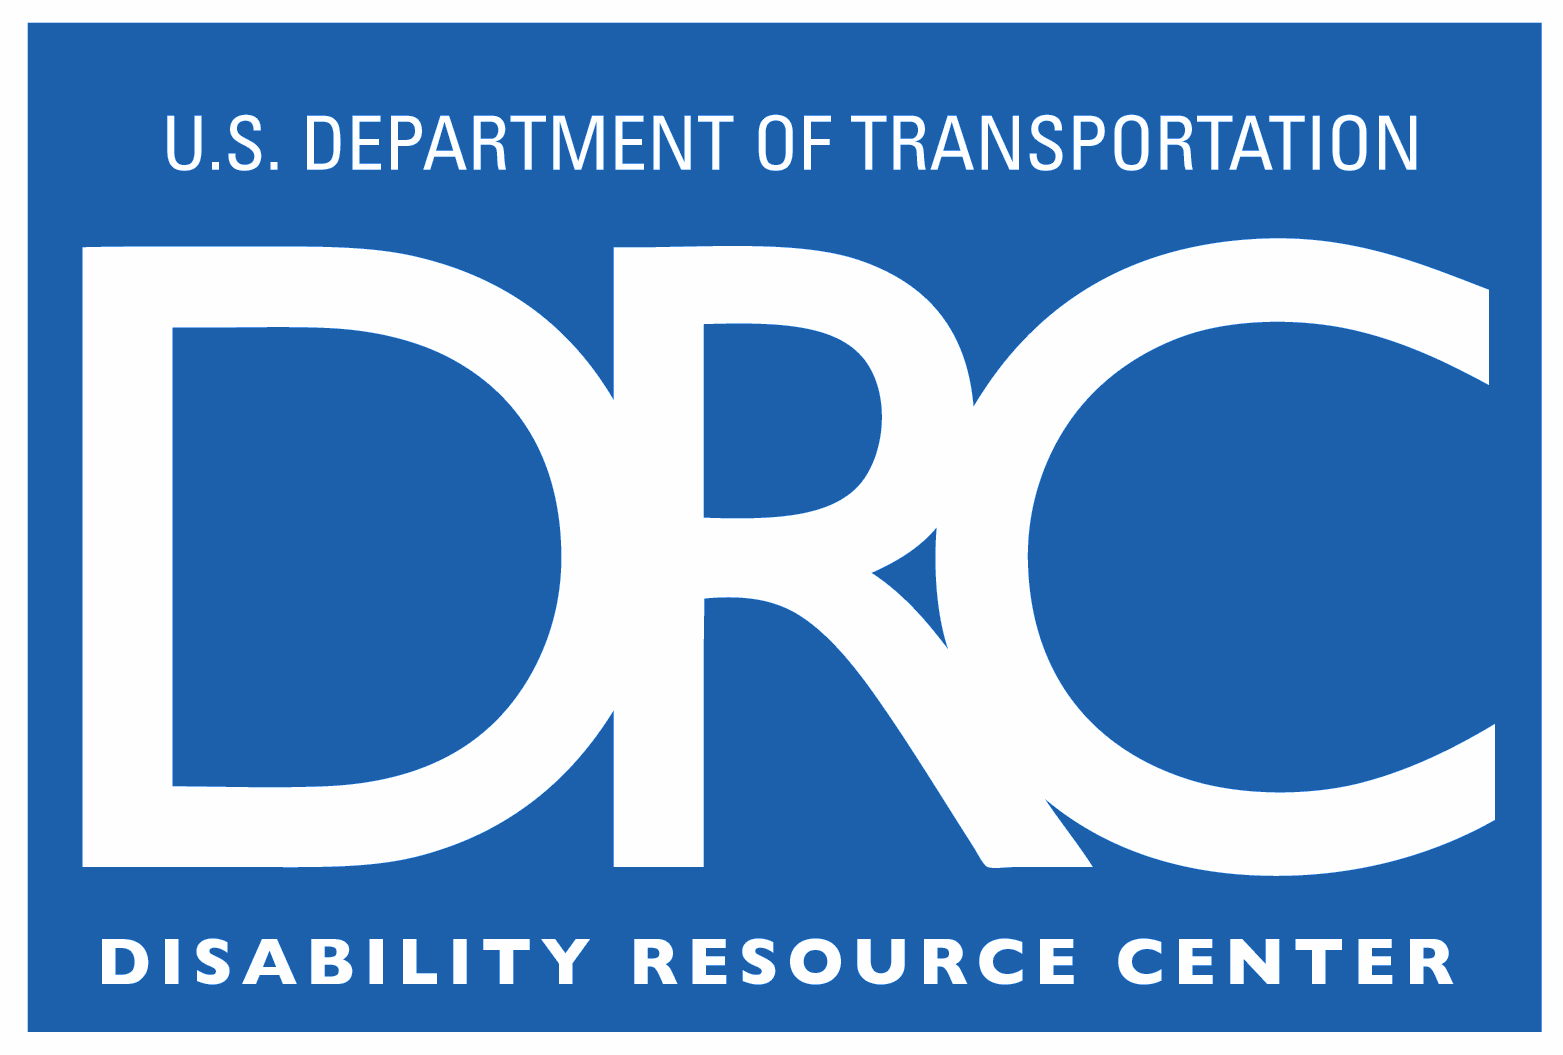 Disability Resource Center Logo